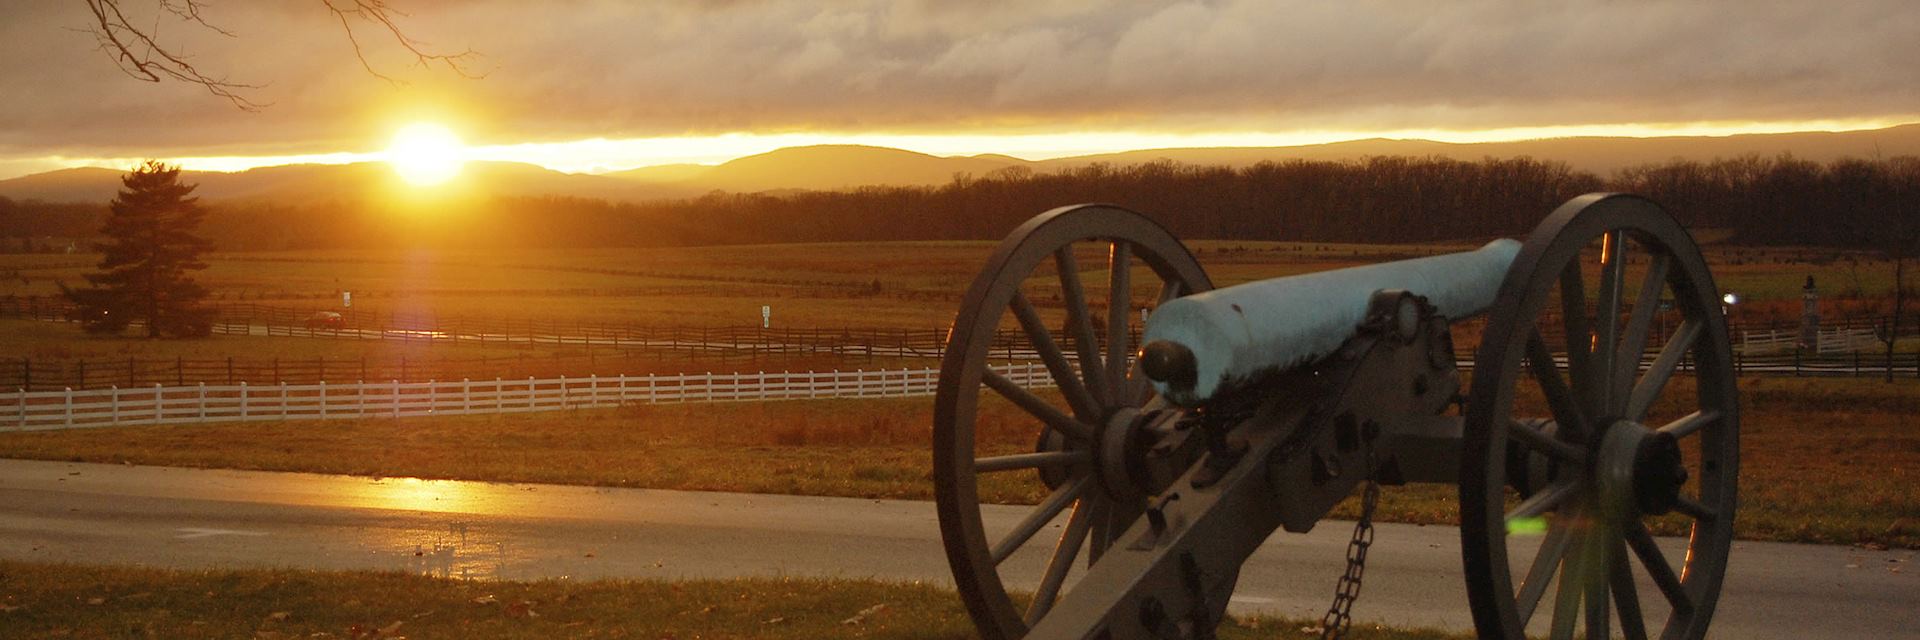 The battlefield of Gettysburg